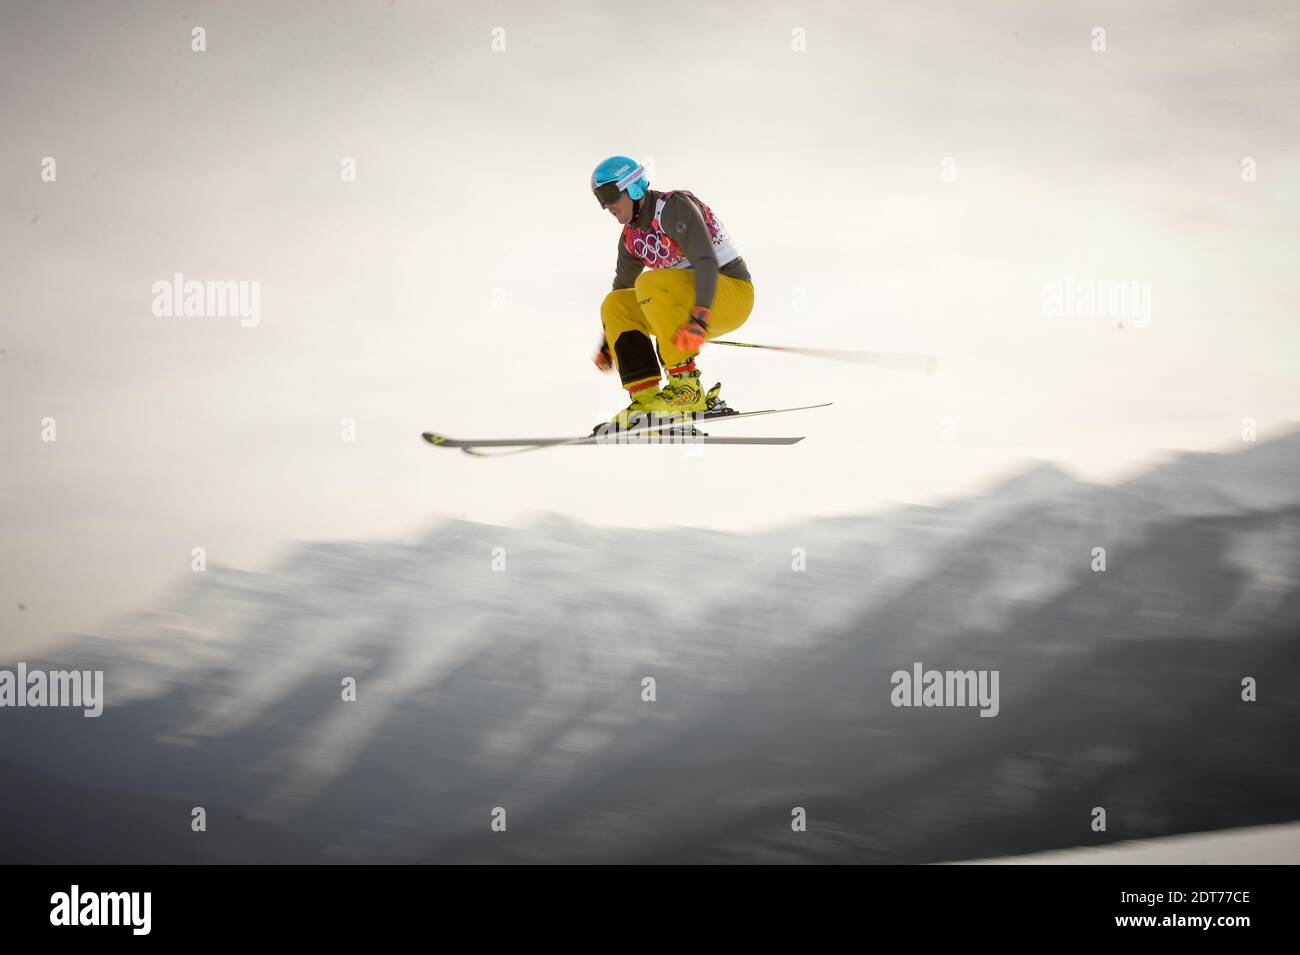 Germany's Thomas Fischer competes son Freestyle Skiing Ski Cross during the Sochi 2014 Winter Olympics on February 20, 2014 in Rosa Khutor Alpine Center in Krasnaya Polyana, Sochi, Russia. Photo Nicolas Gouhier/ABACAPRESS.COM Stock Photo